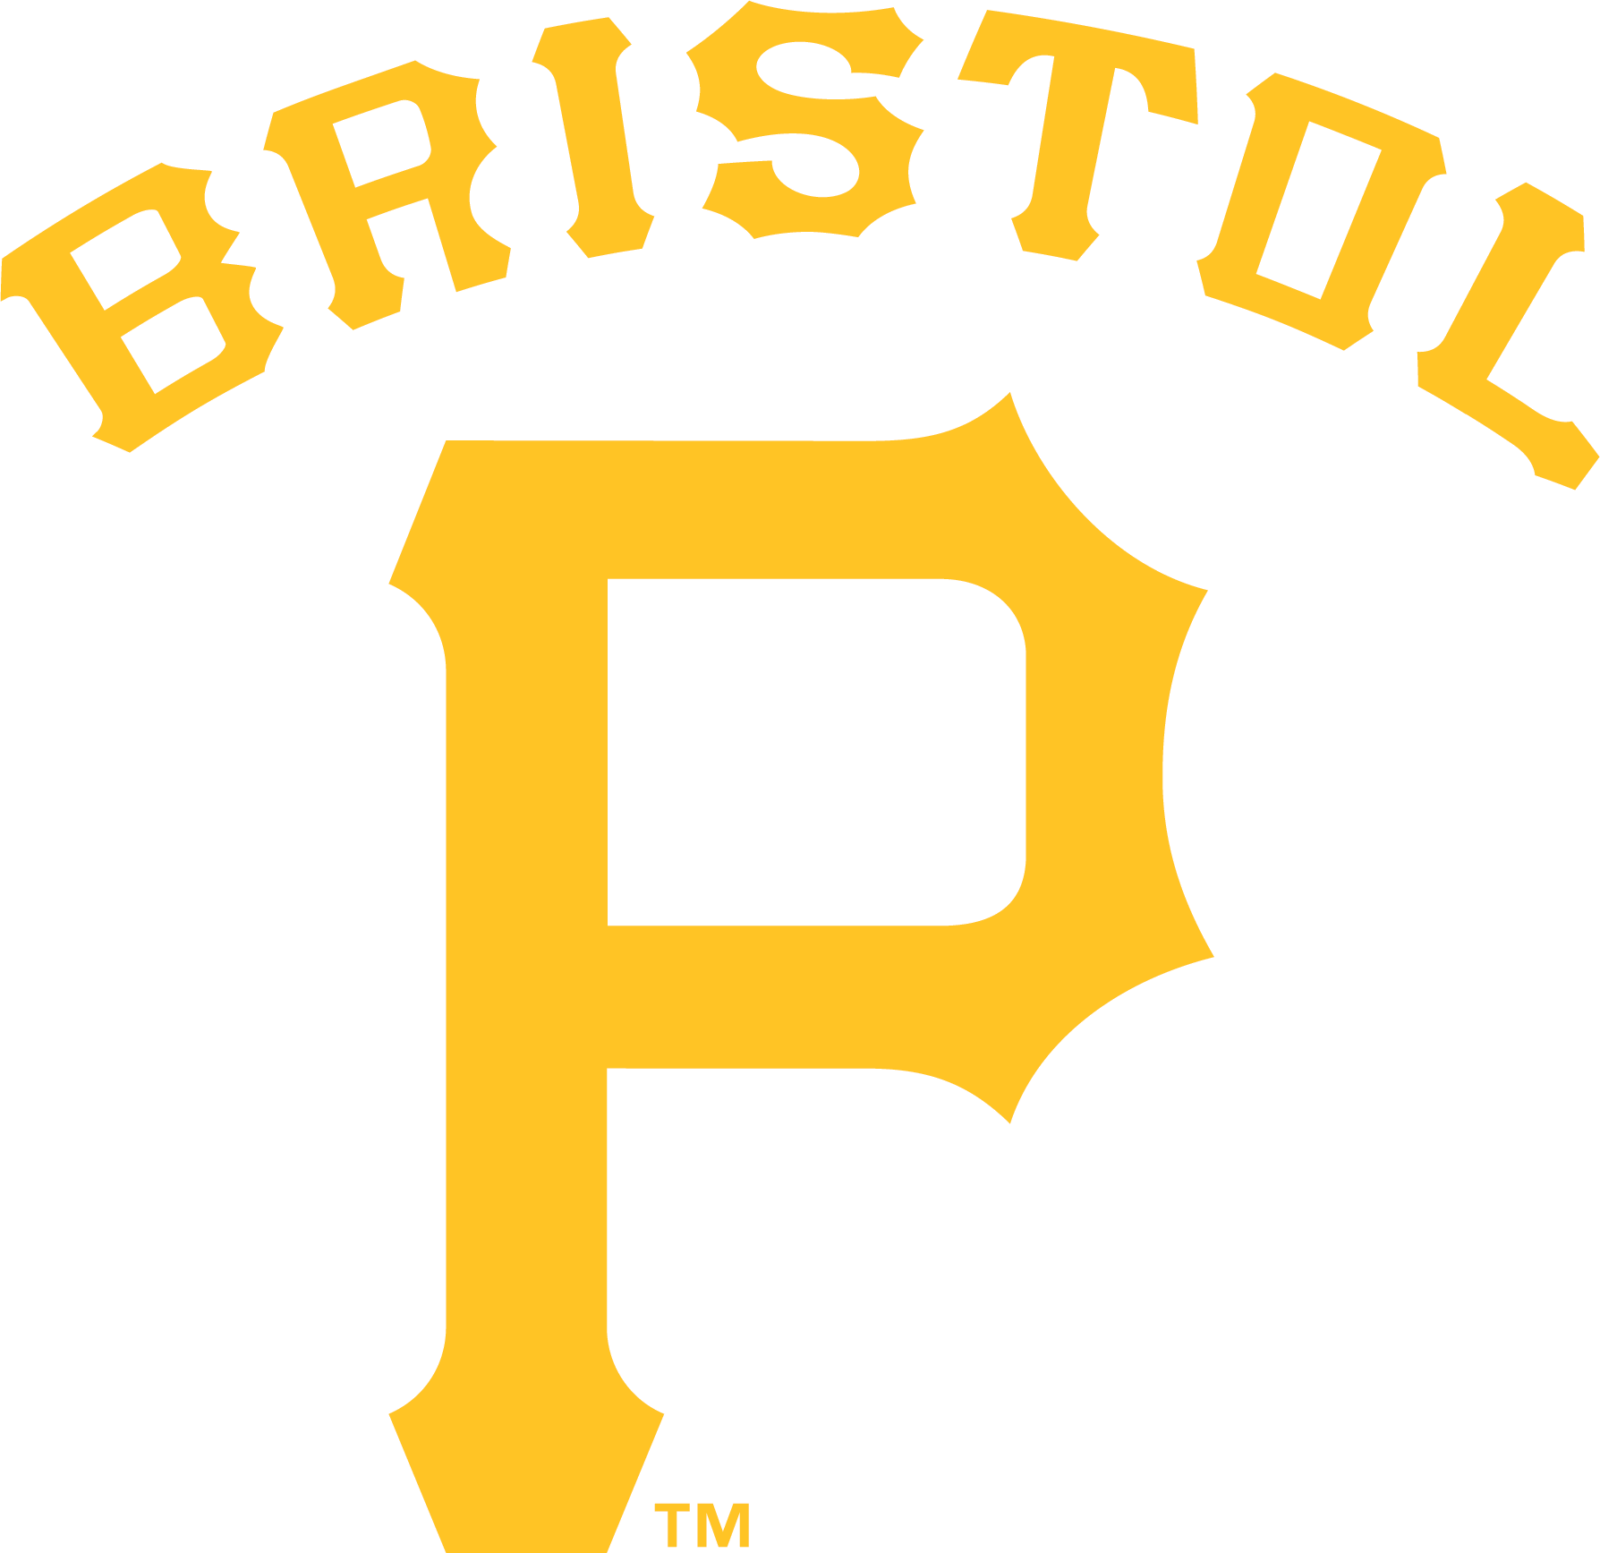 Bristol Pirates Logo